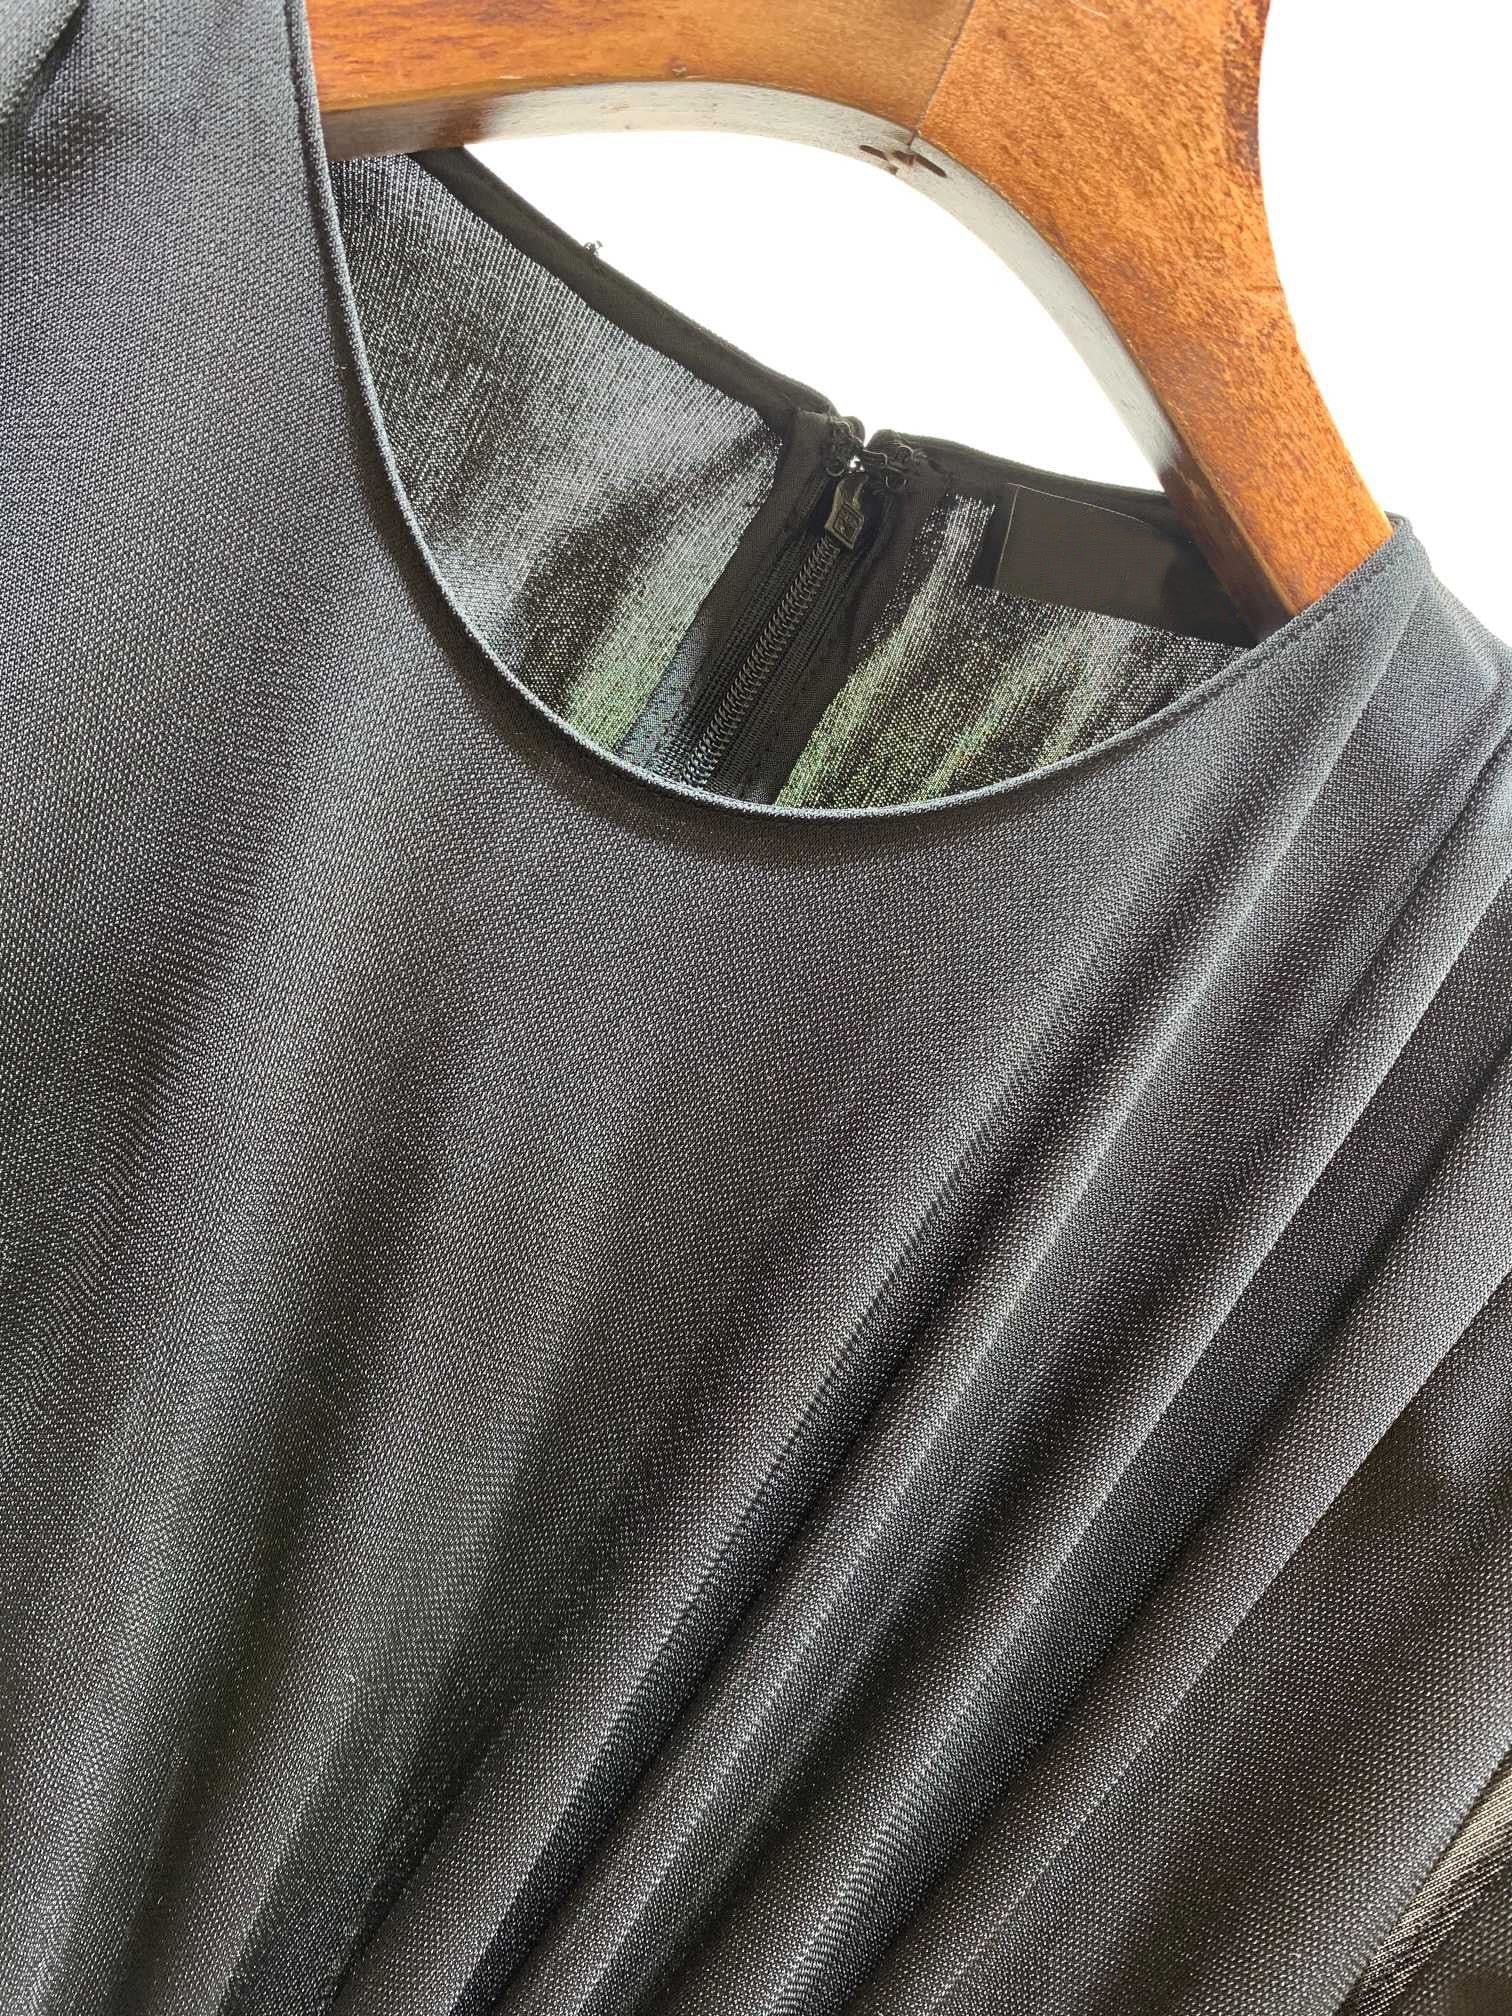 2020 High Quality Sexy Waist Revealing Metal Decor Dress